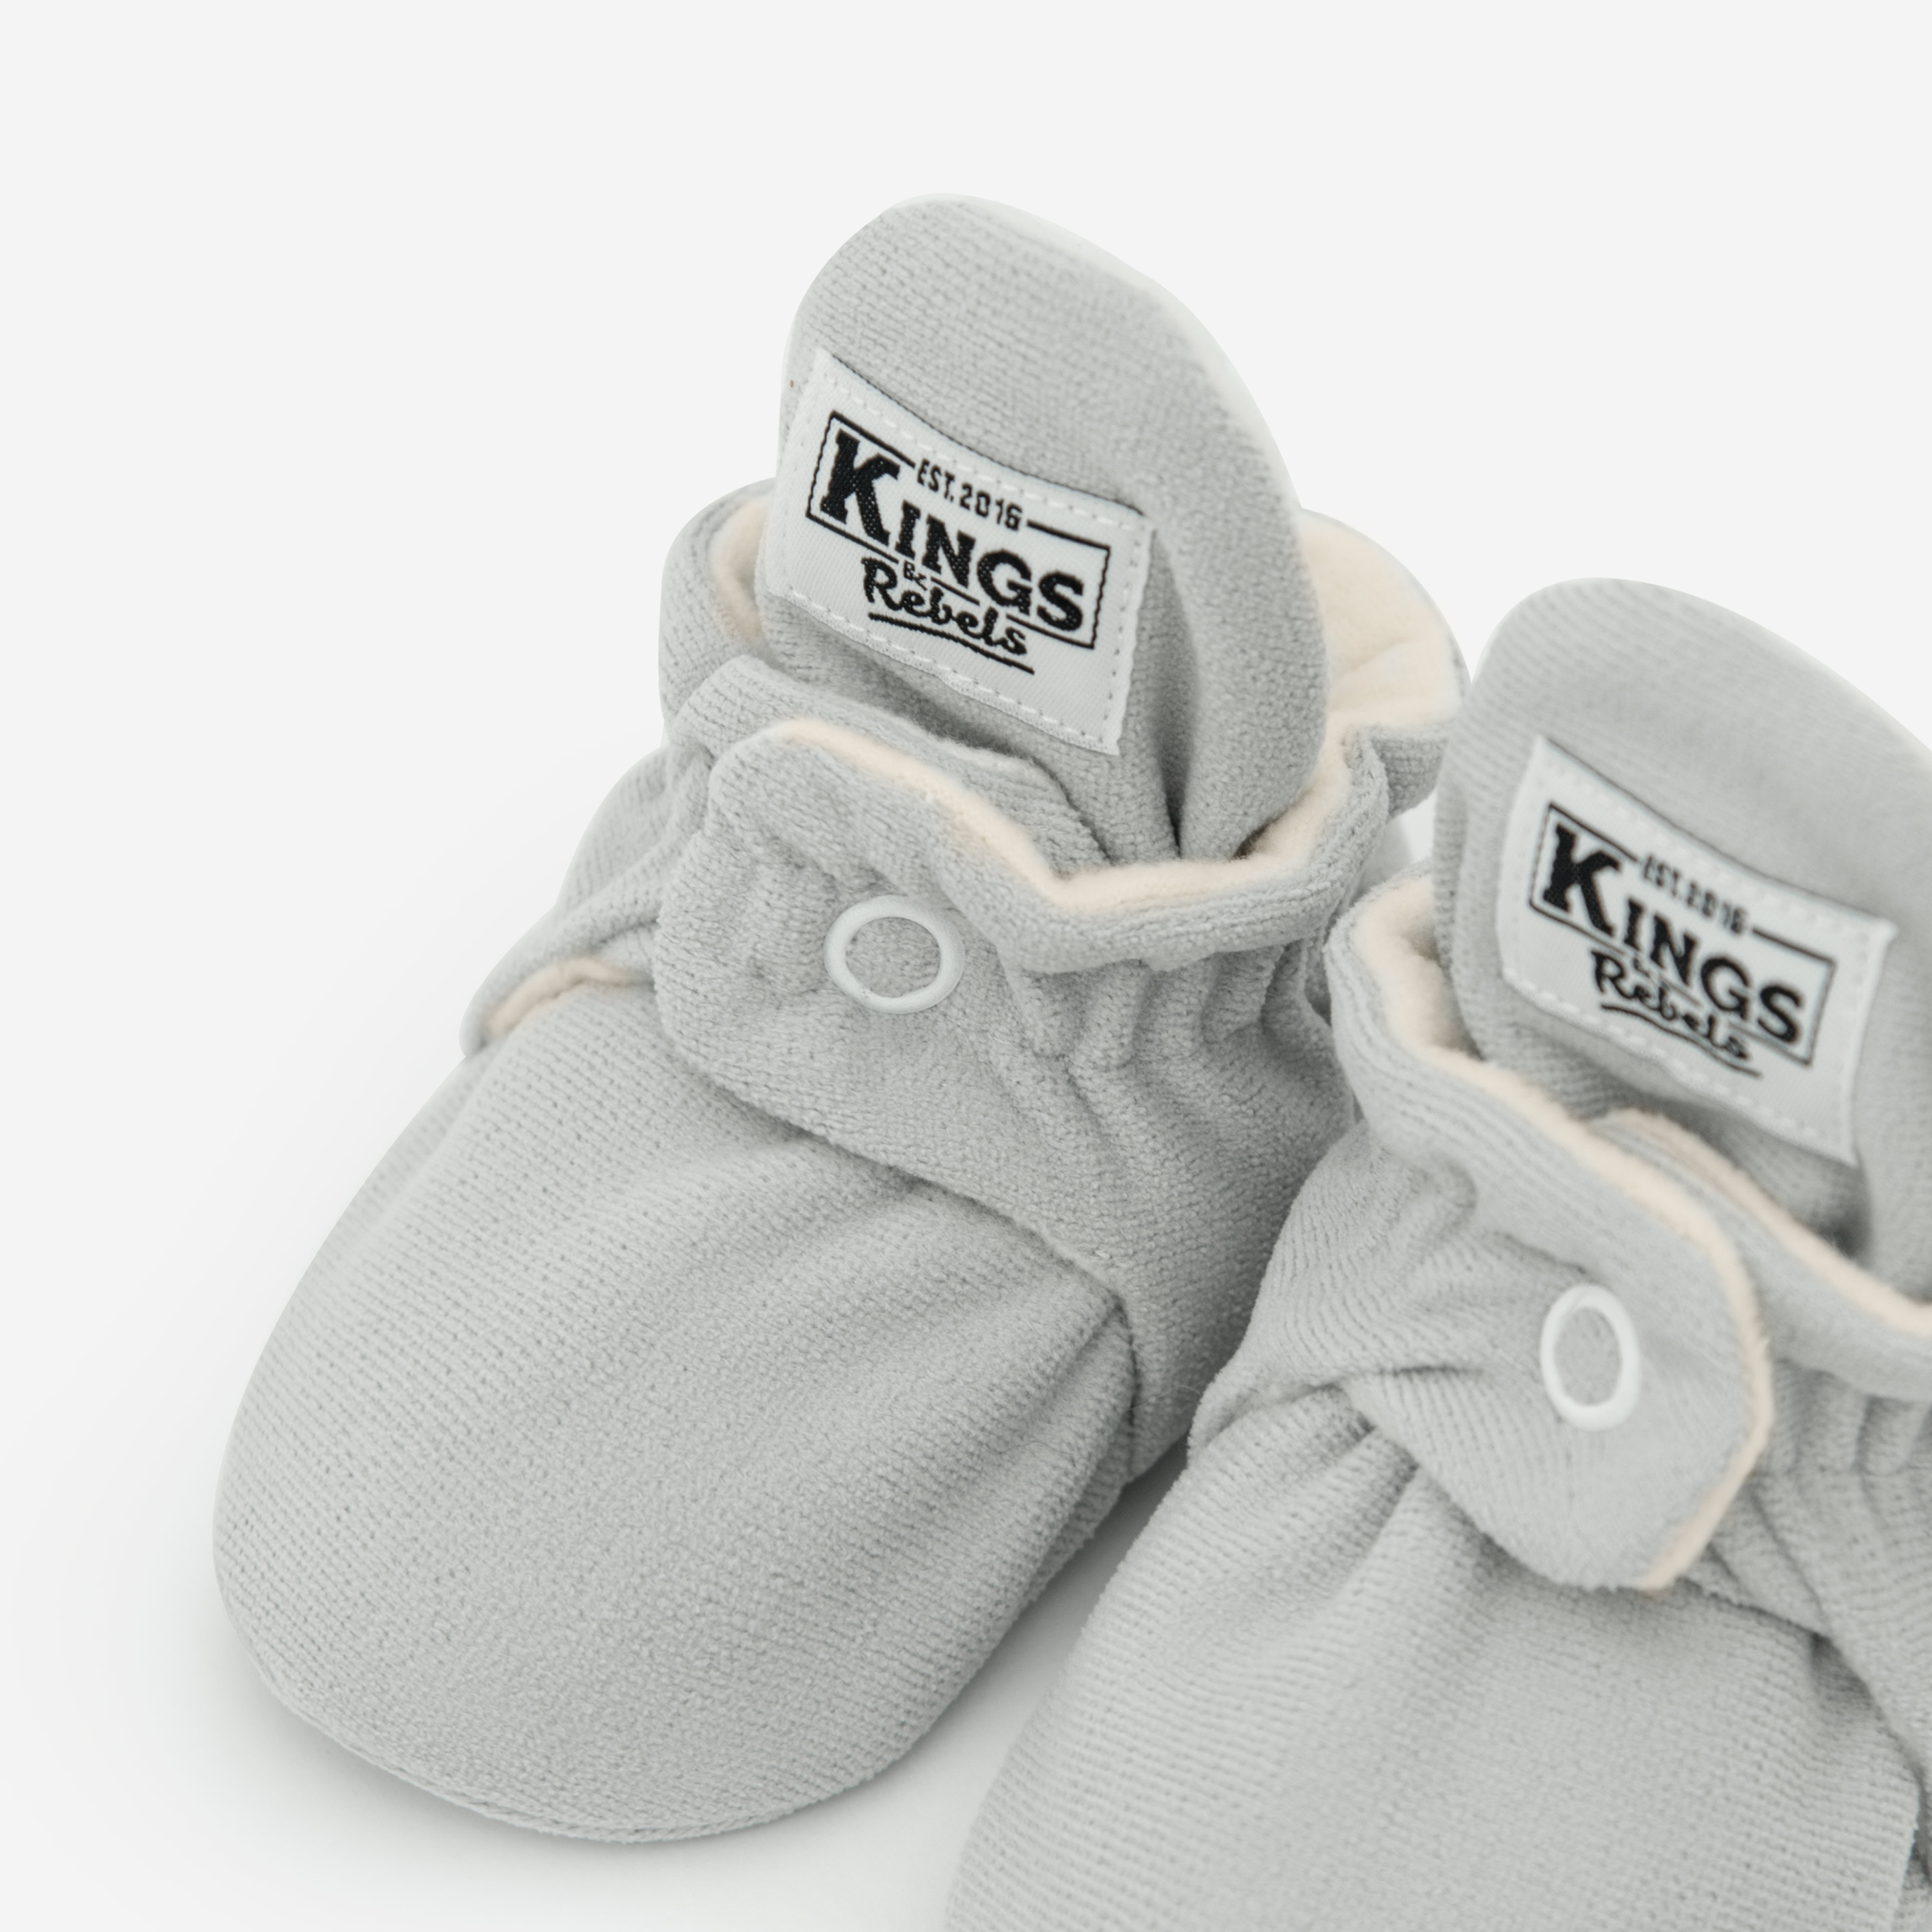 Schuhe & Co Classic/Gamuza grey Babyschühchen 12 Monate